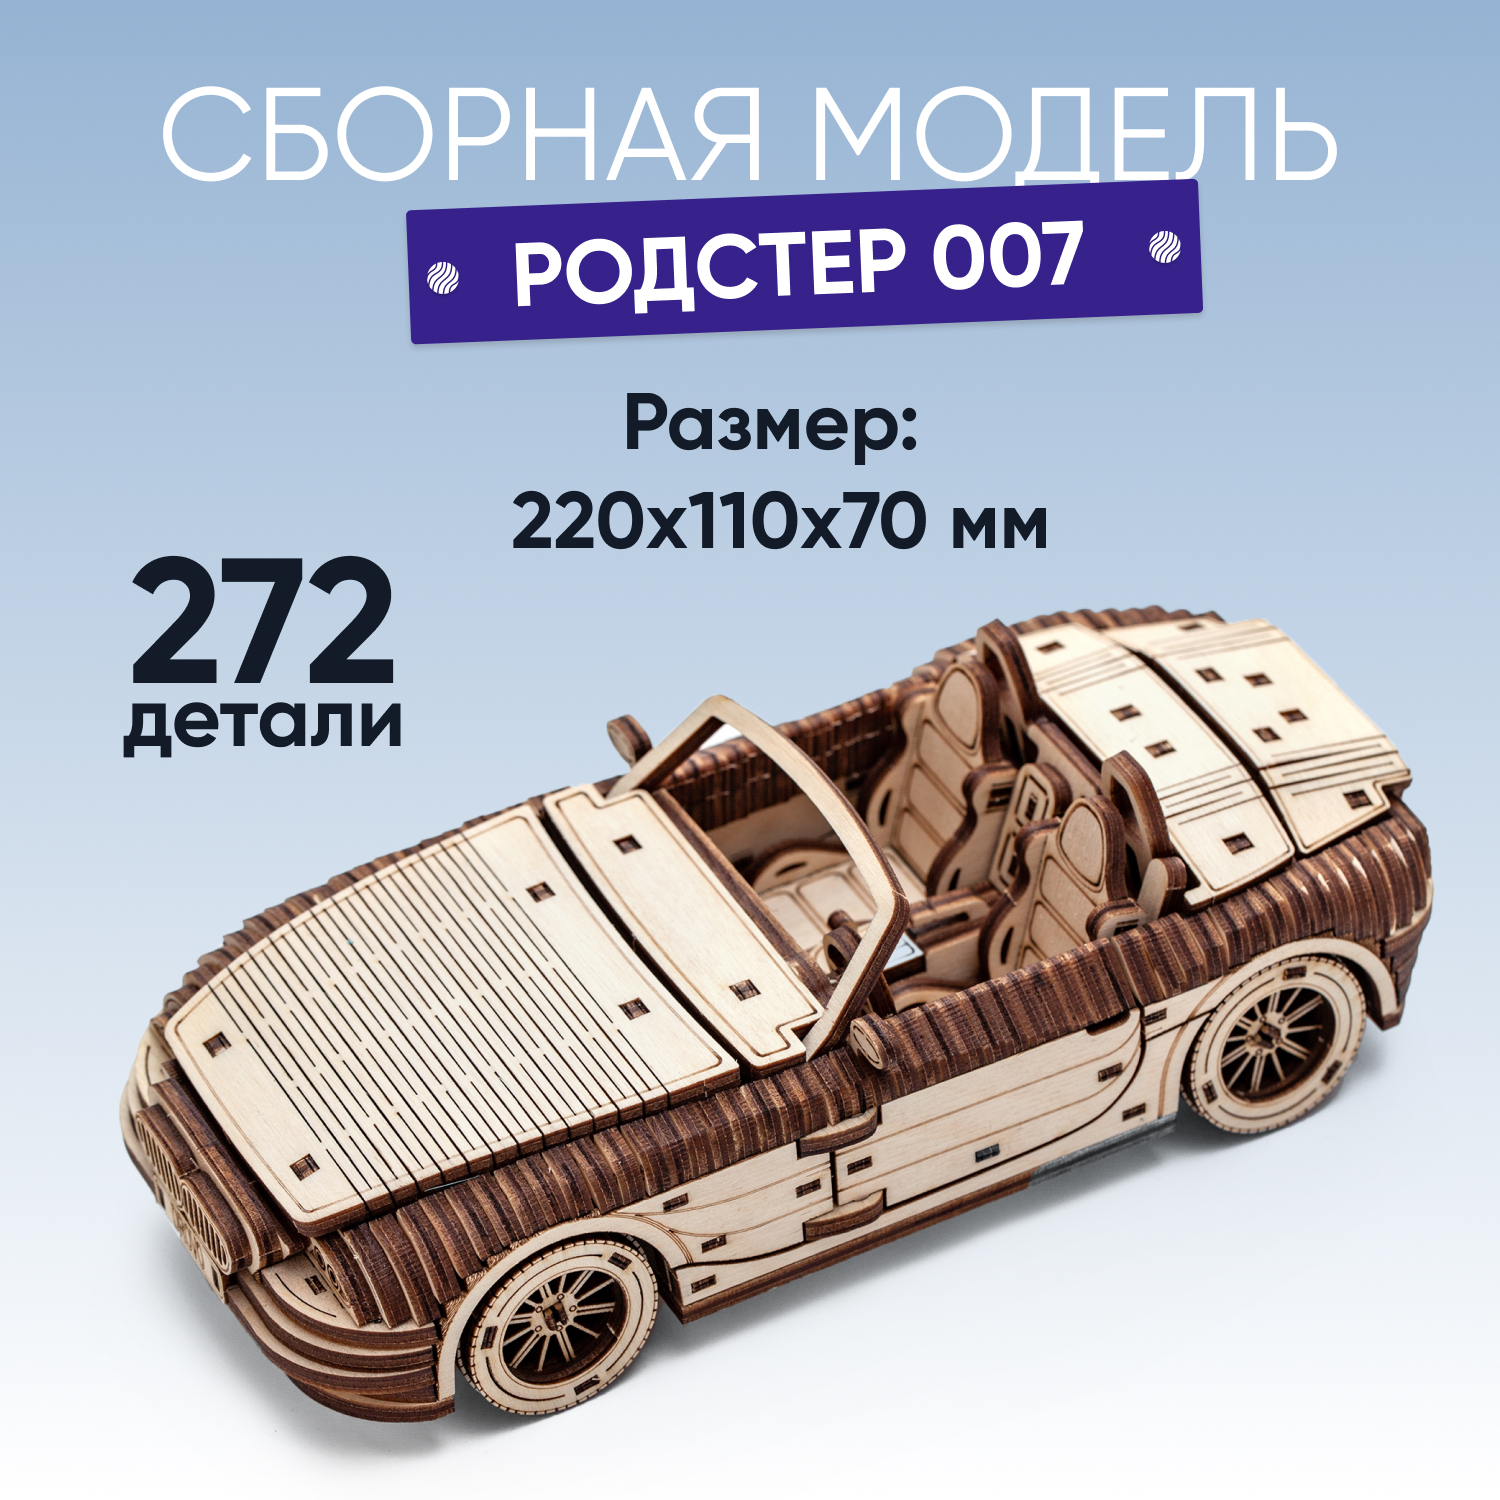 Сборная модель автомобиля DROVO Родстер 007